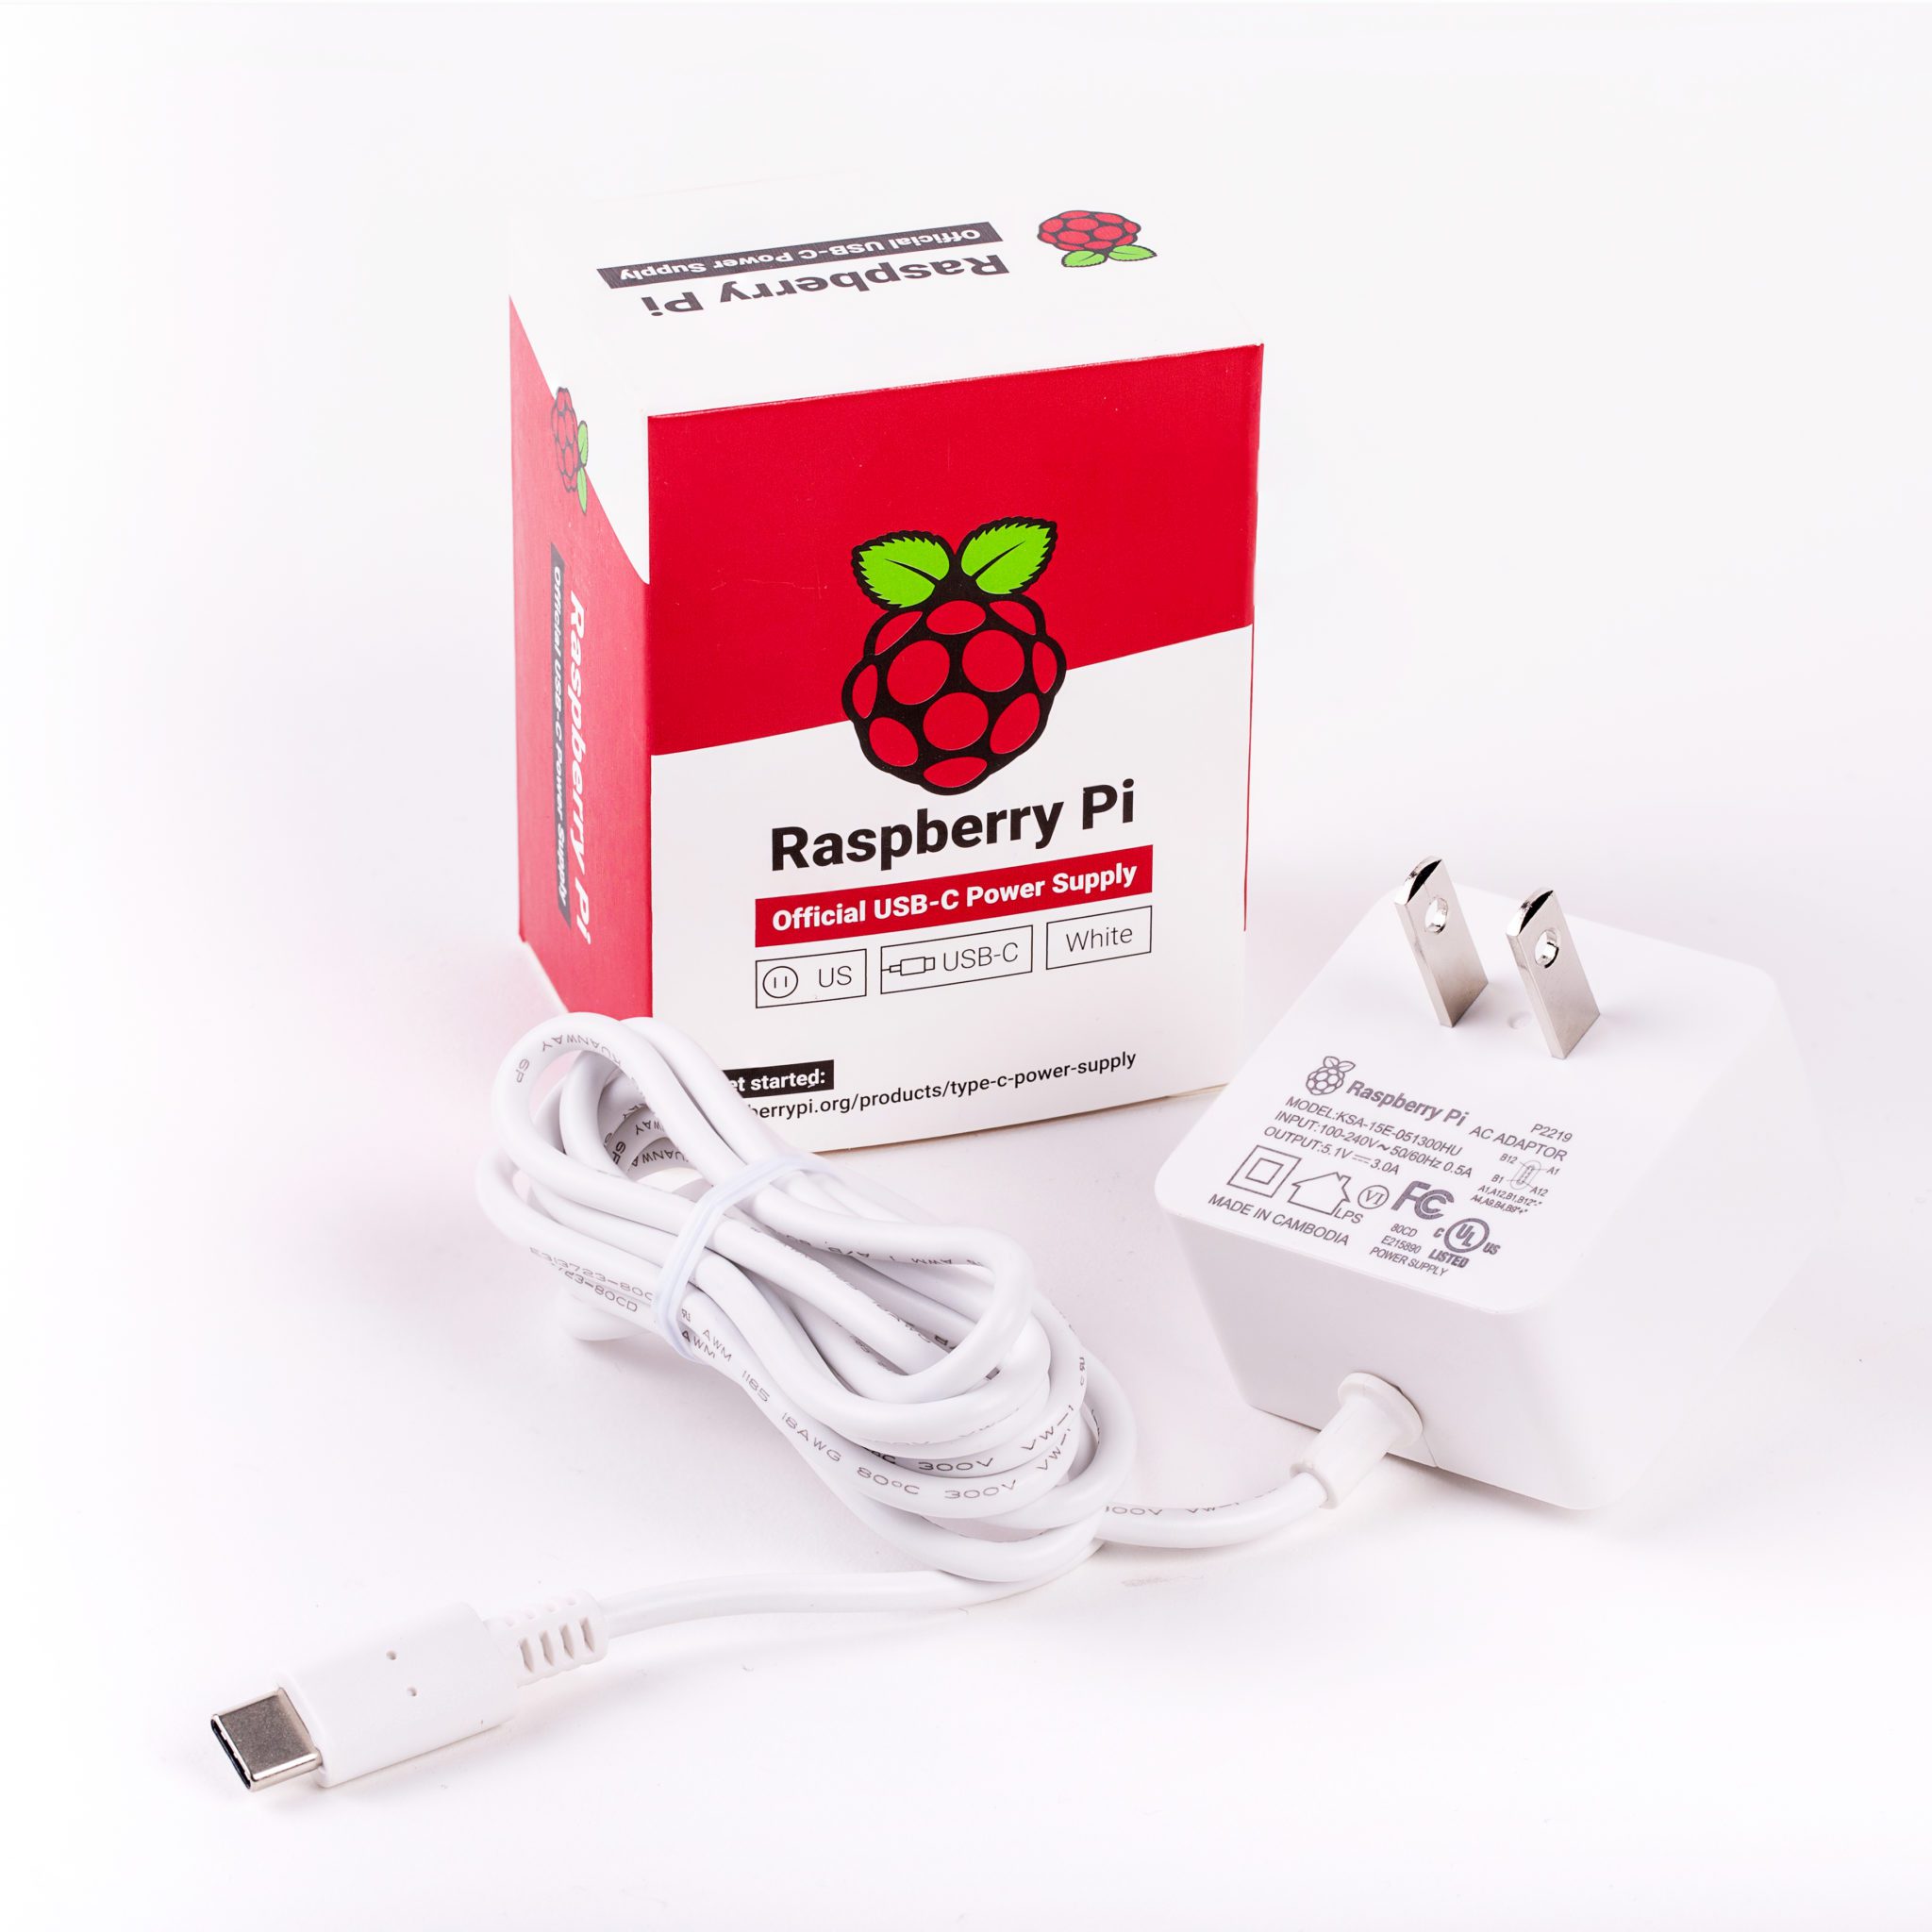 Official Raspberry Pi USB-C Power Supply – 5V 3A - White - US